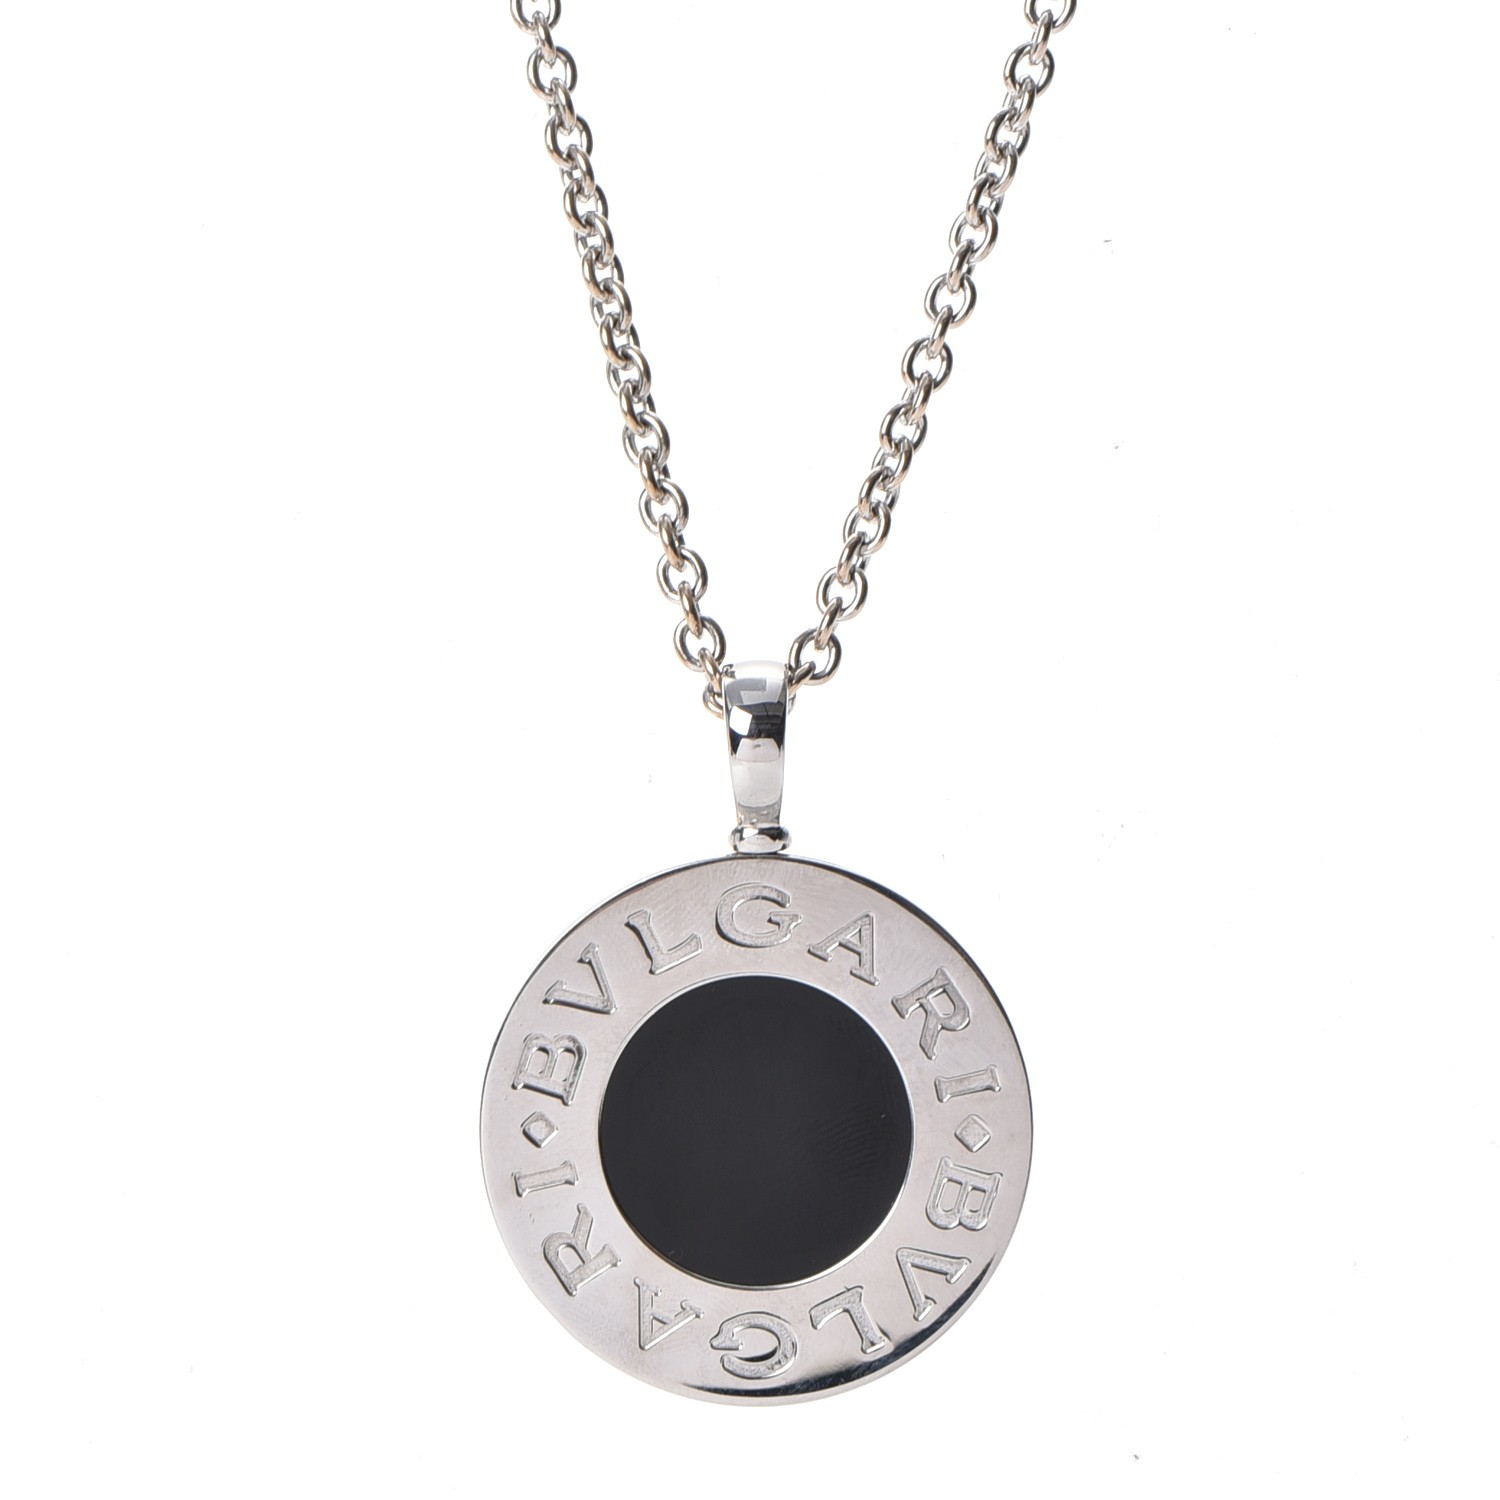 bvlgari black pendant